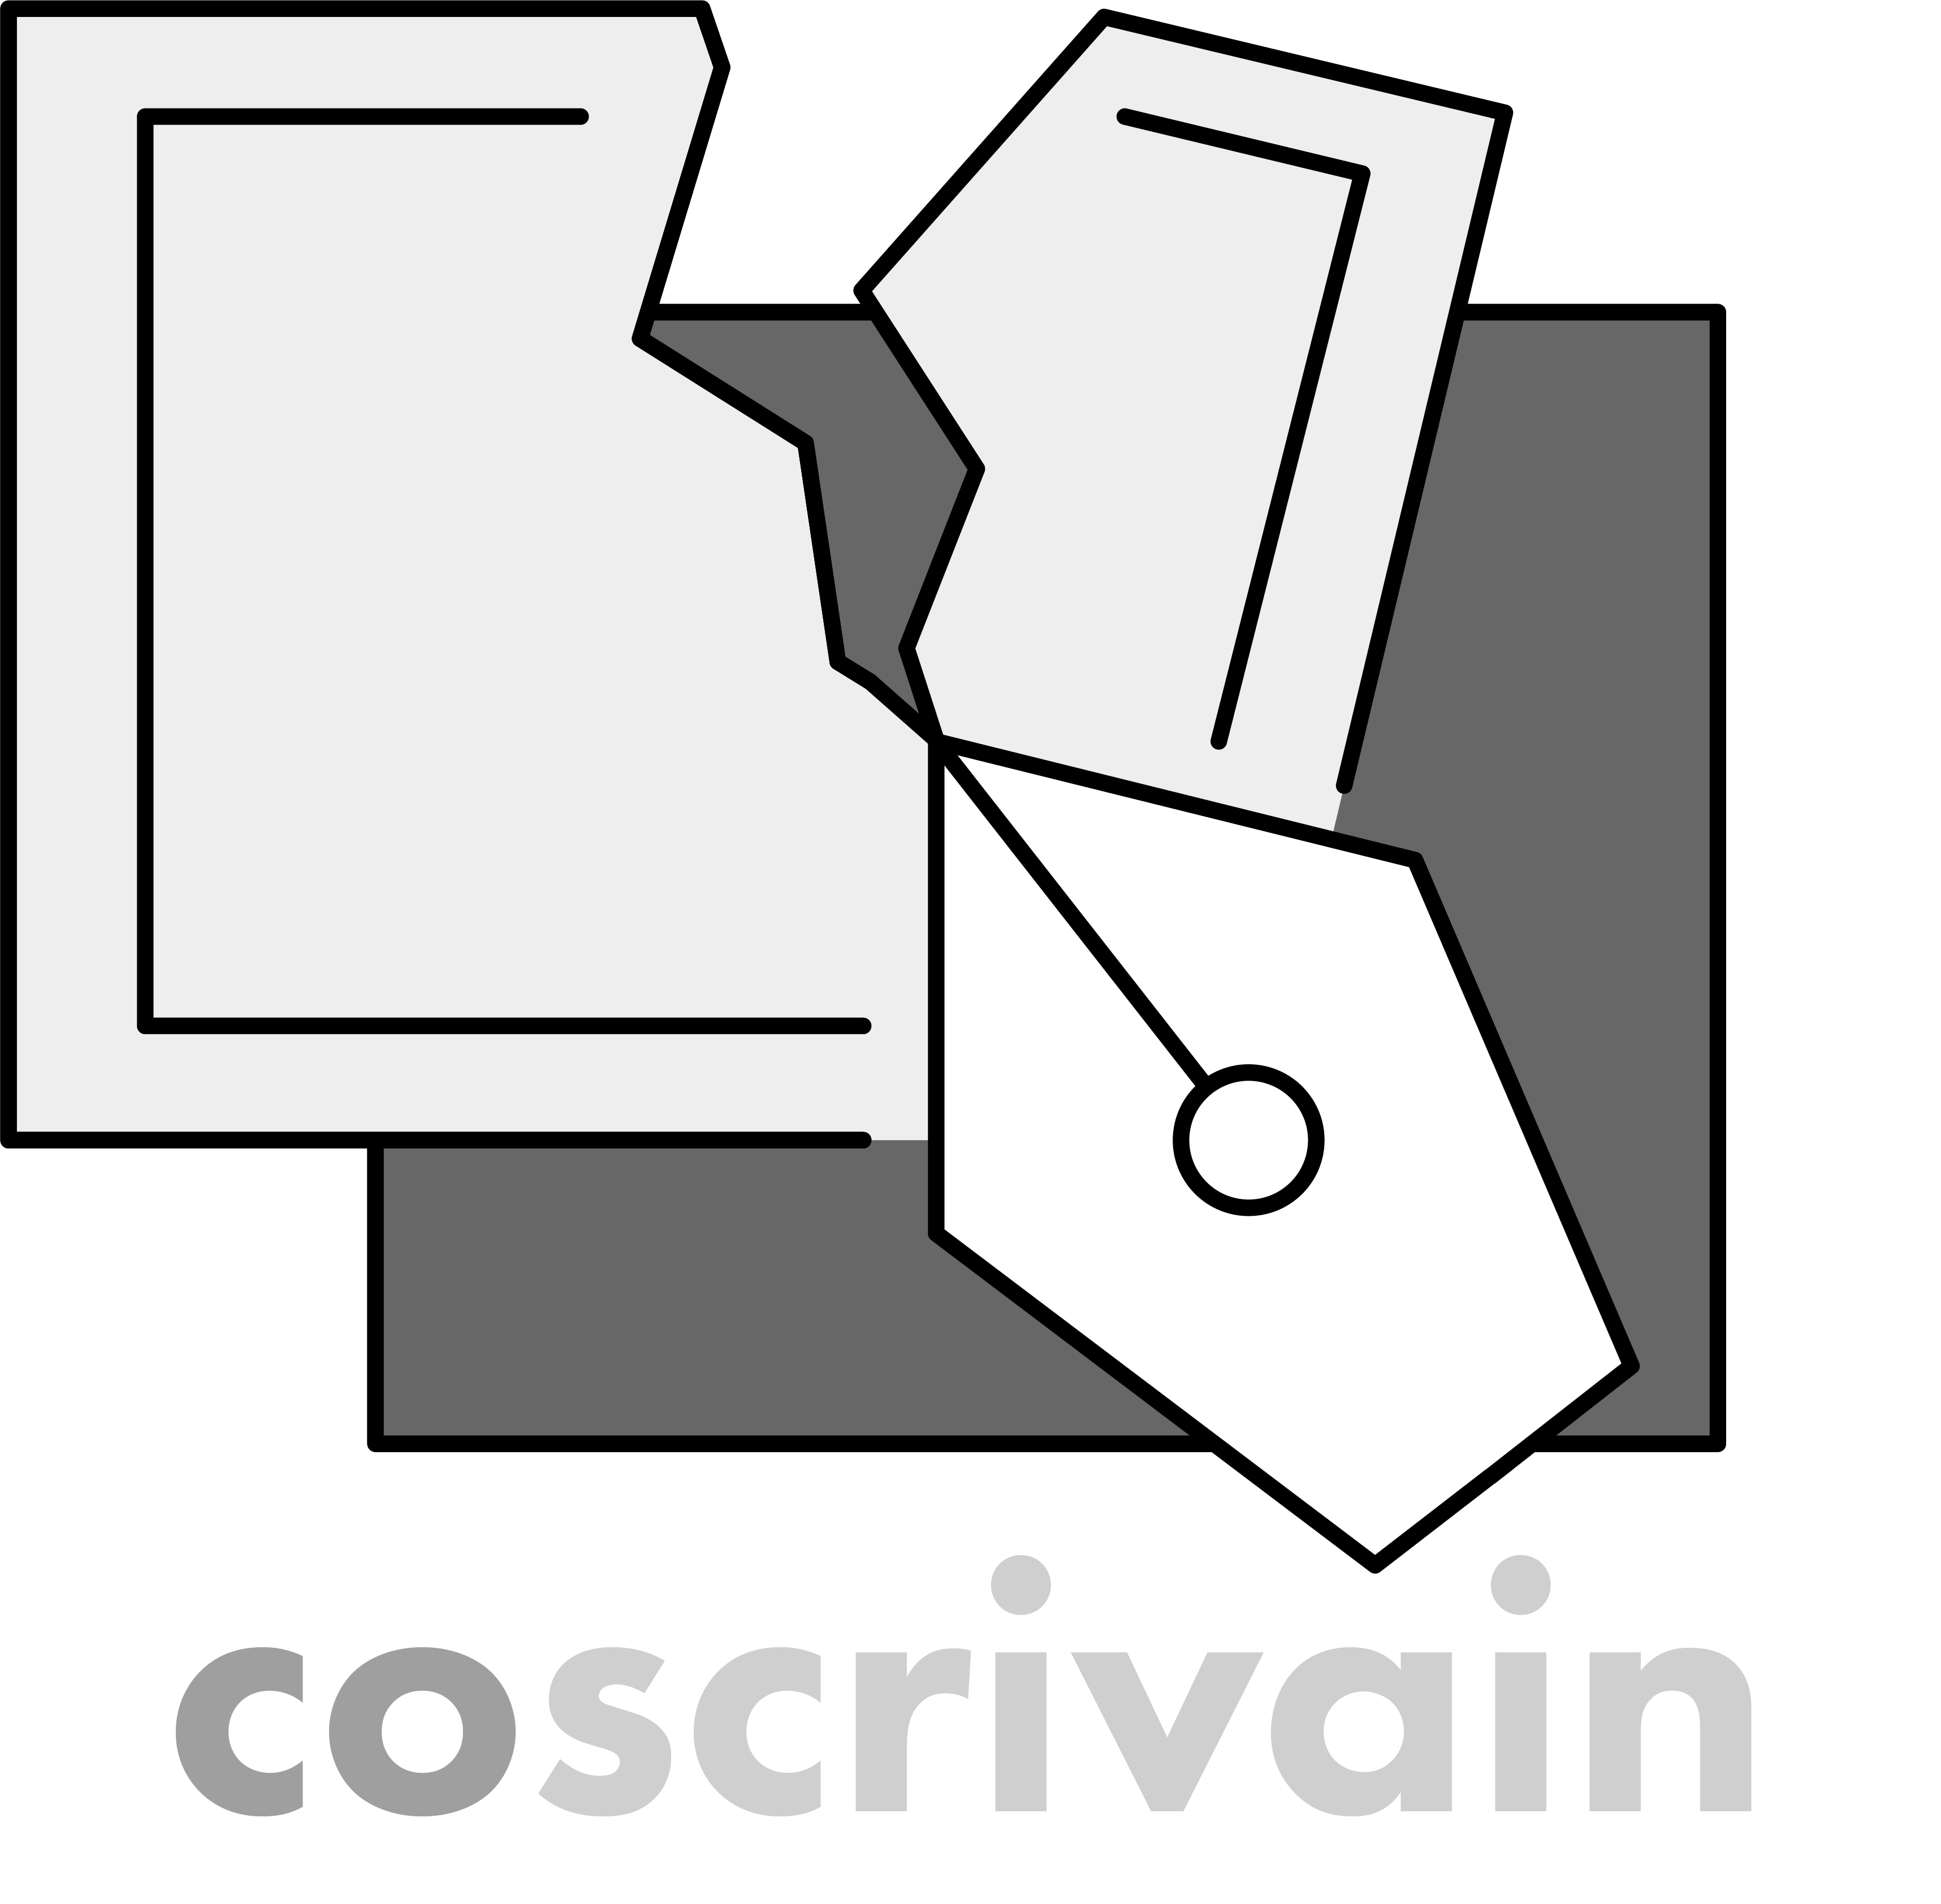 Cosrivain